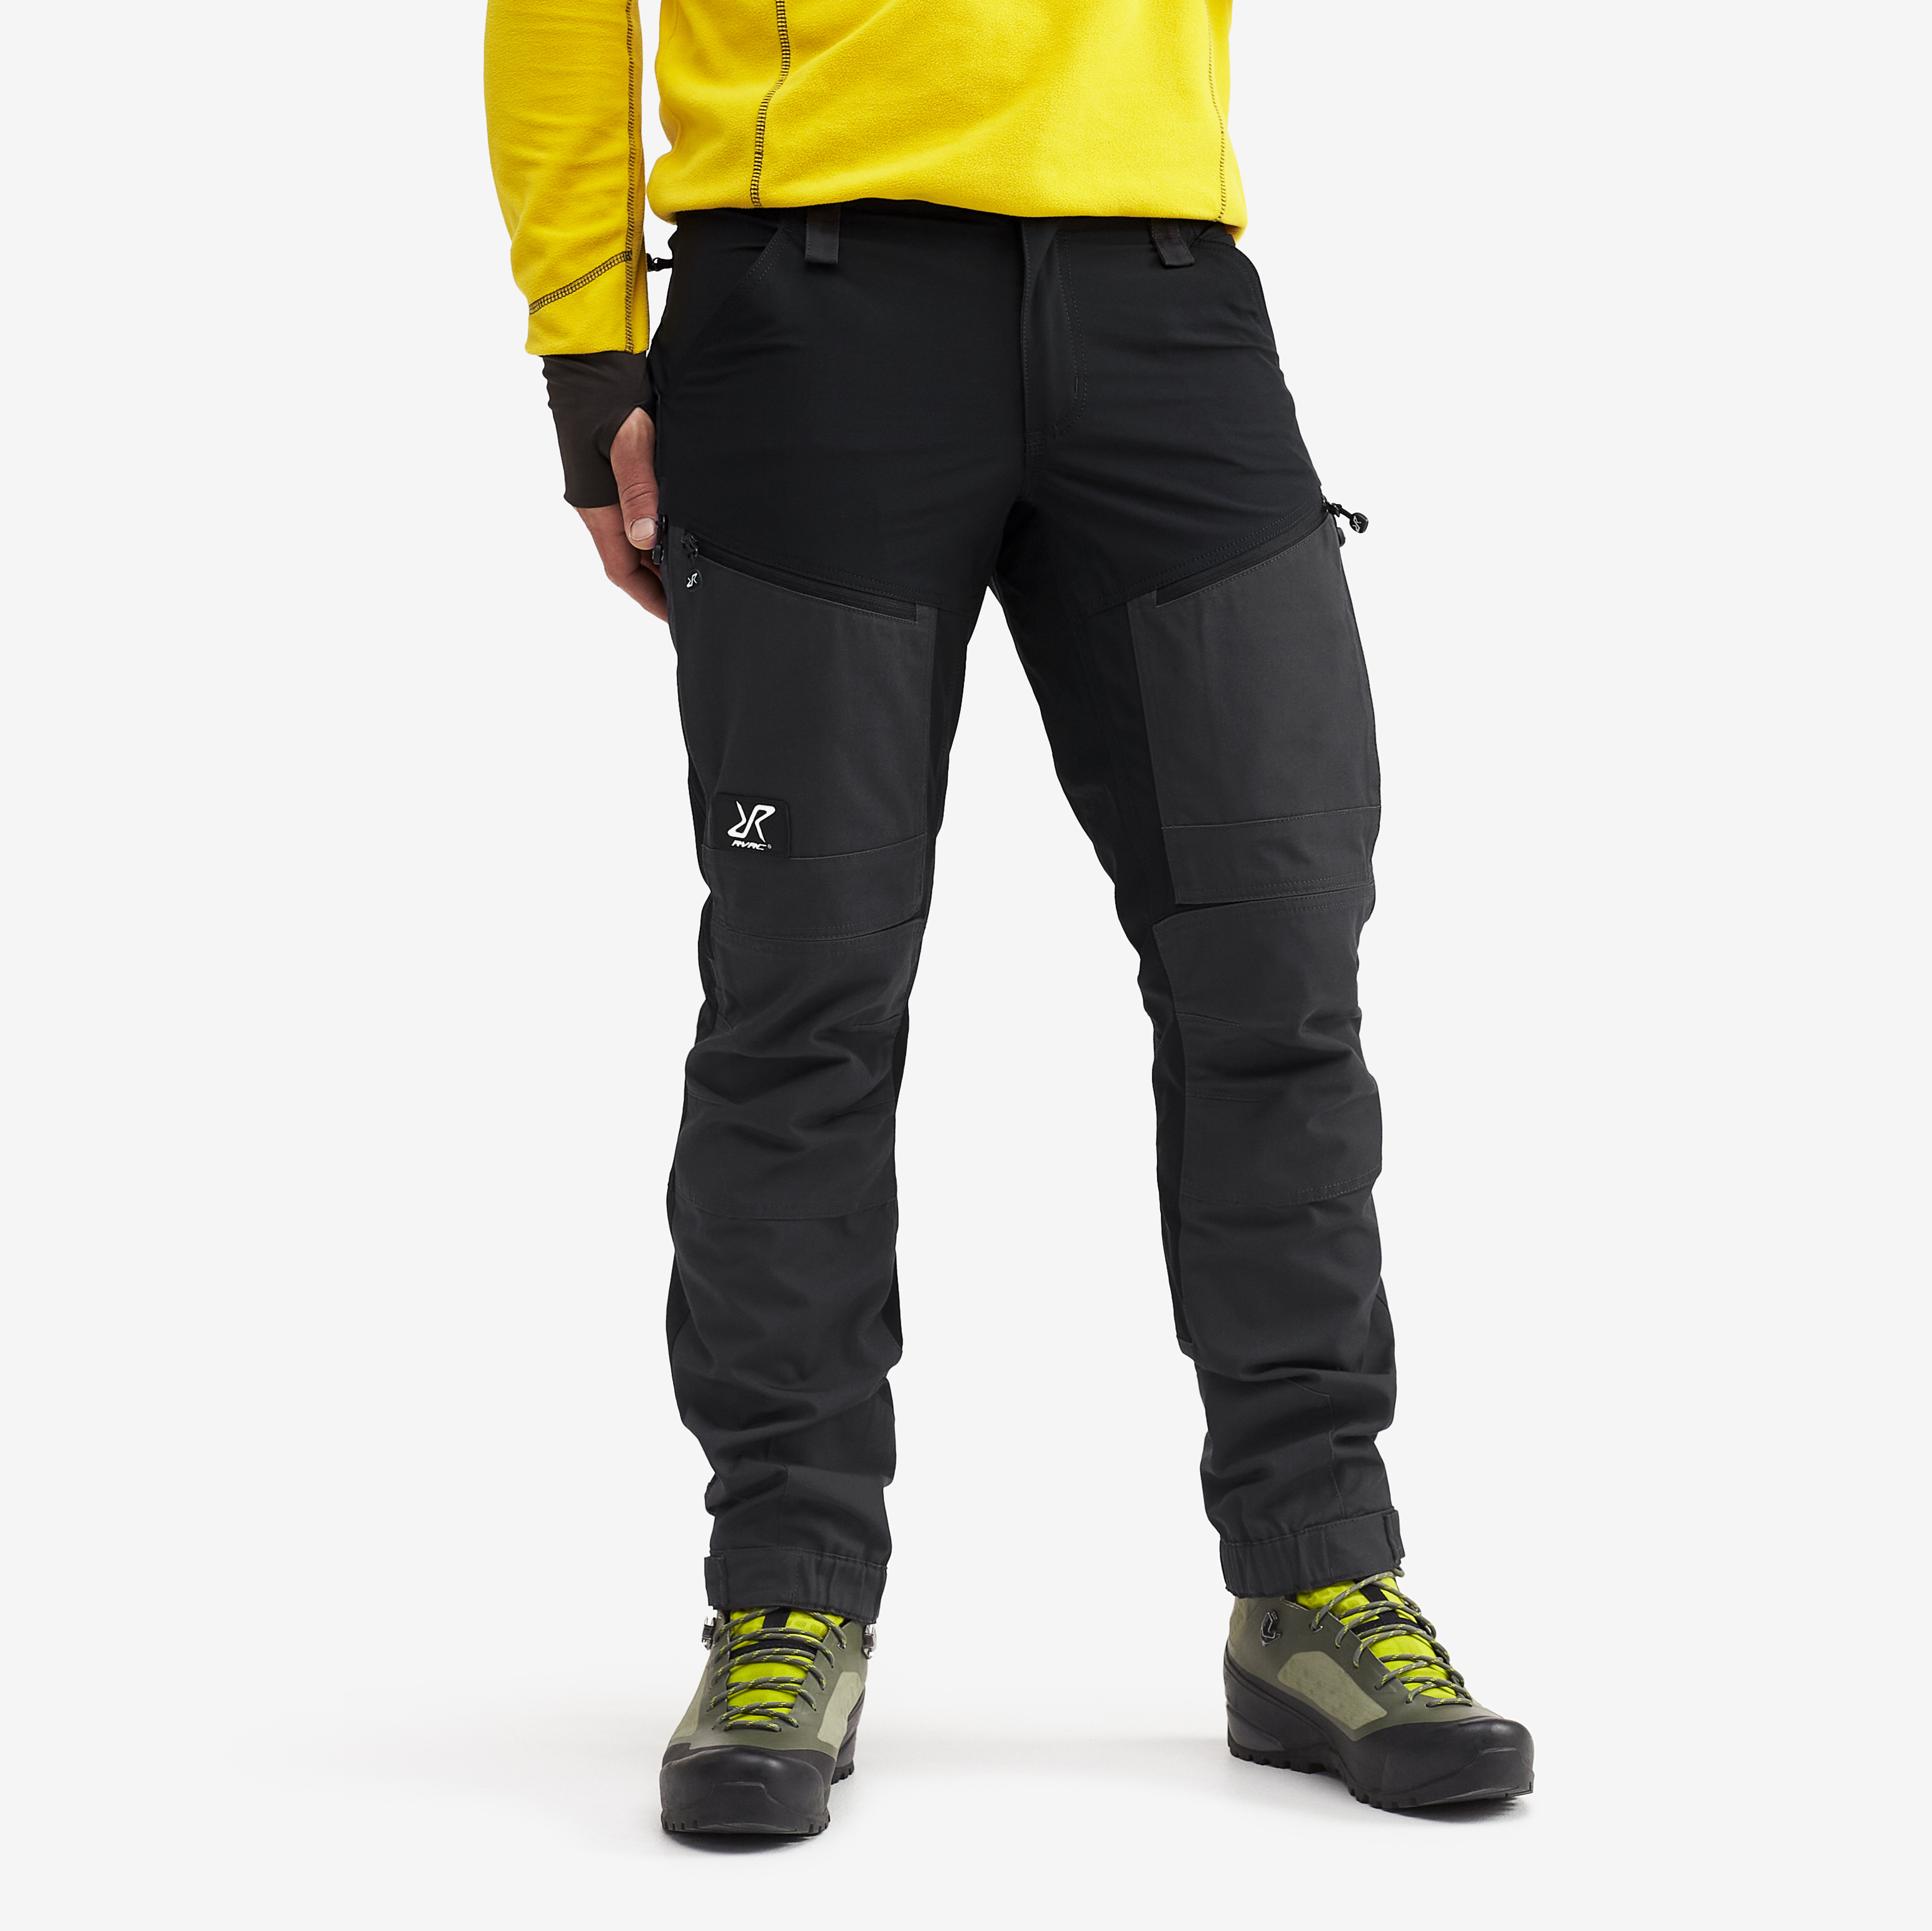 RVRC GP Pro Short hiking pants for men in black